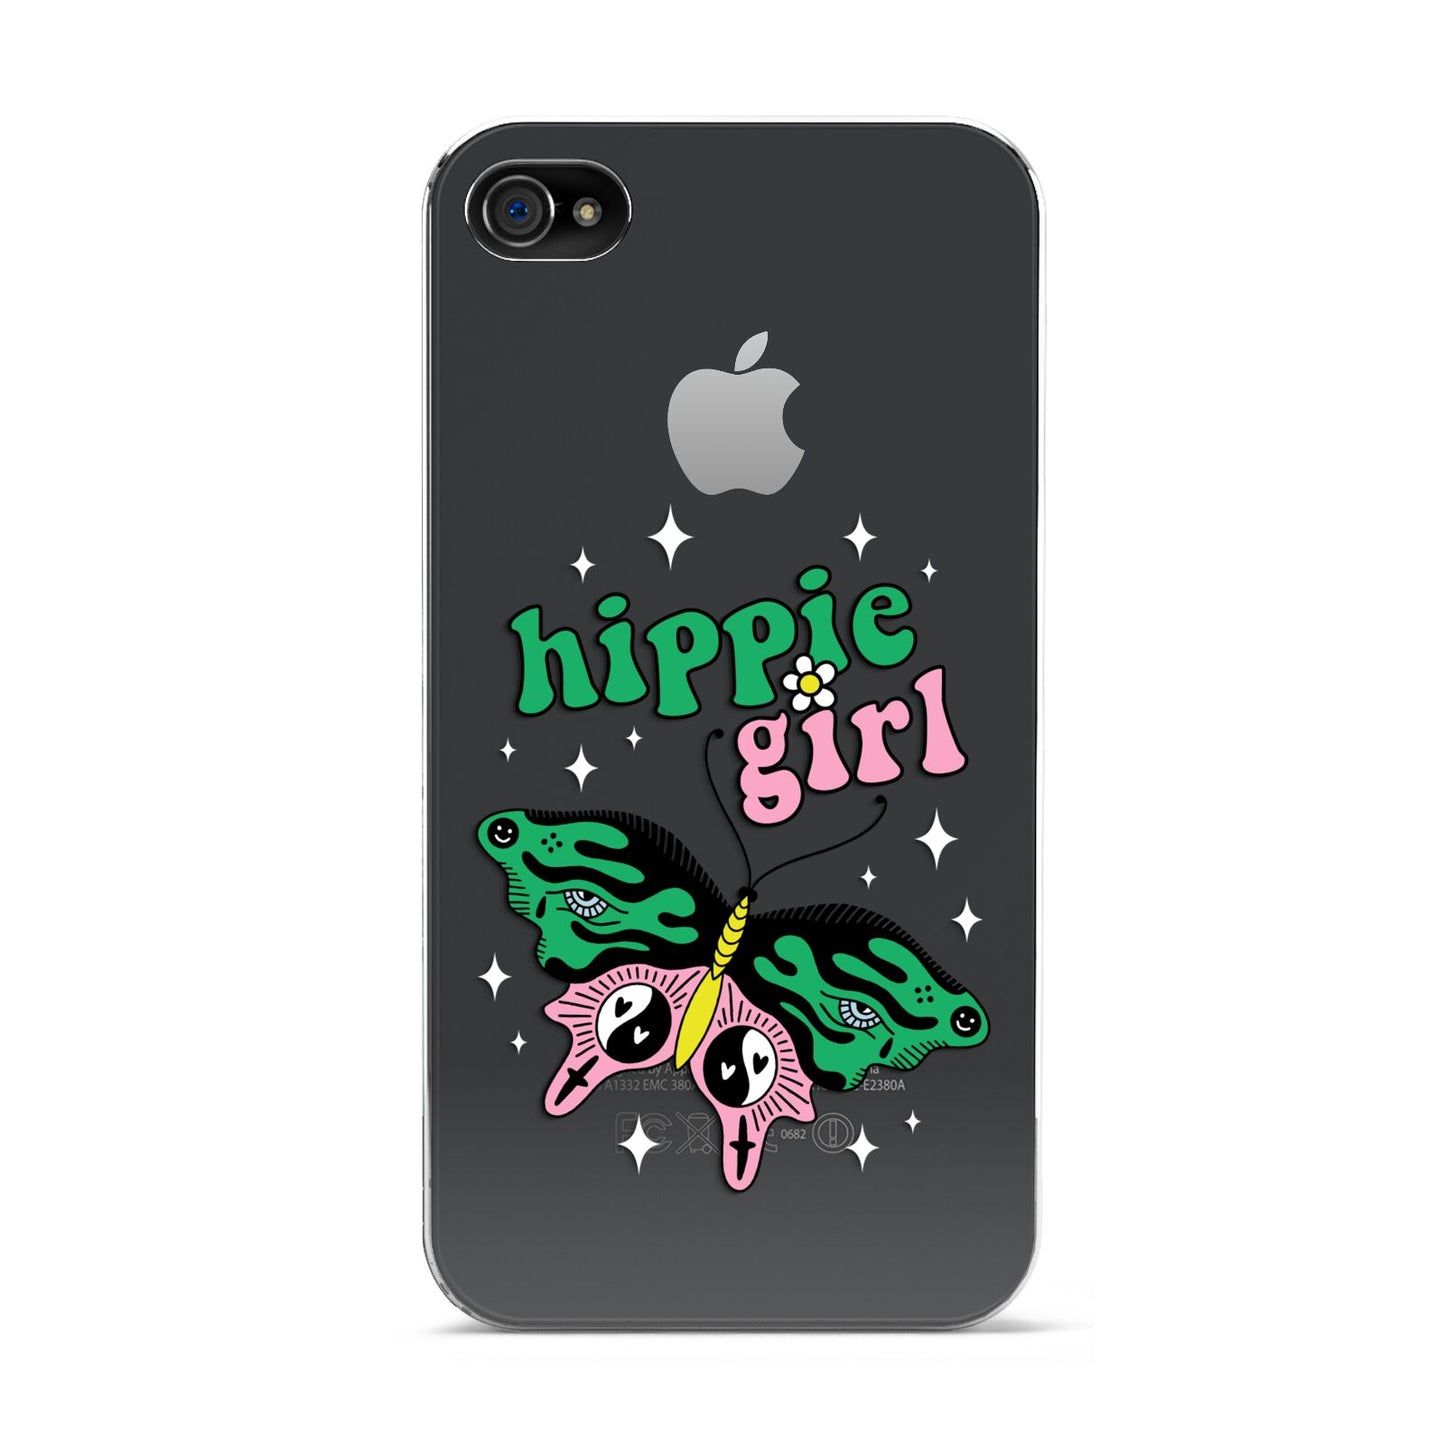 Hippie Girl Apple iPhone 4s Case